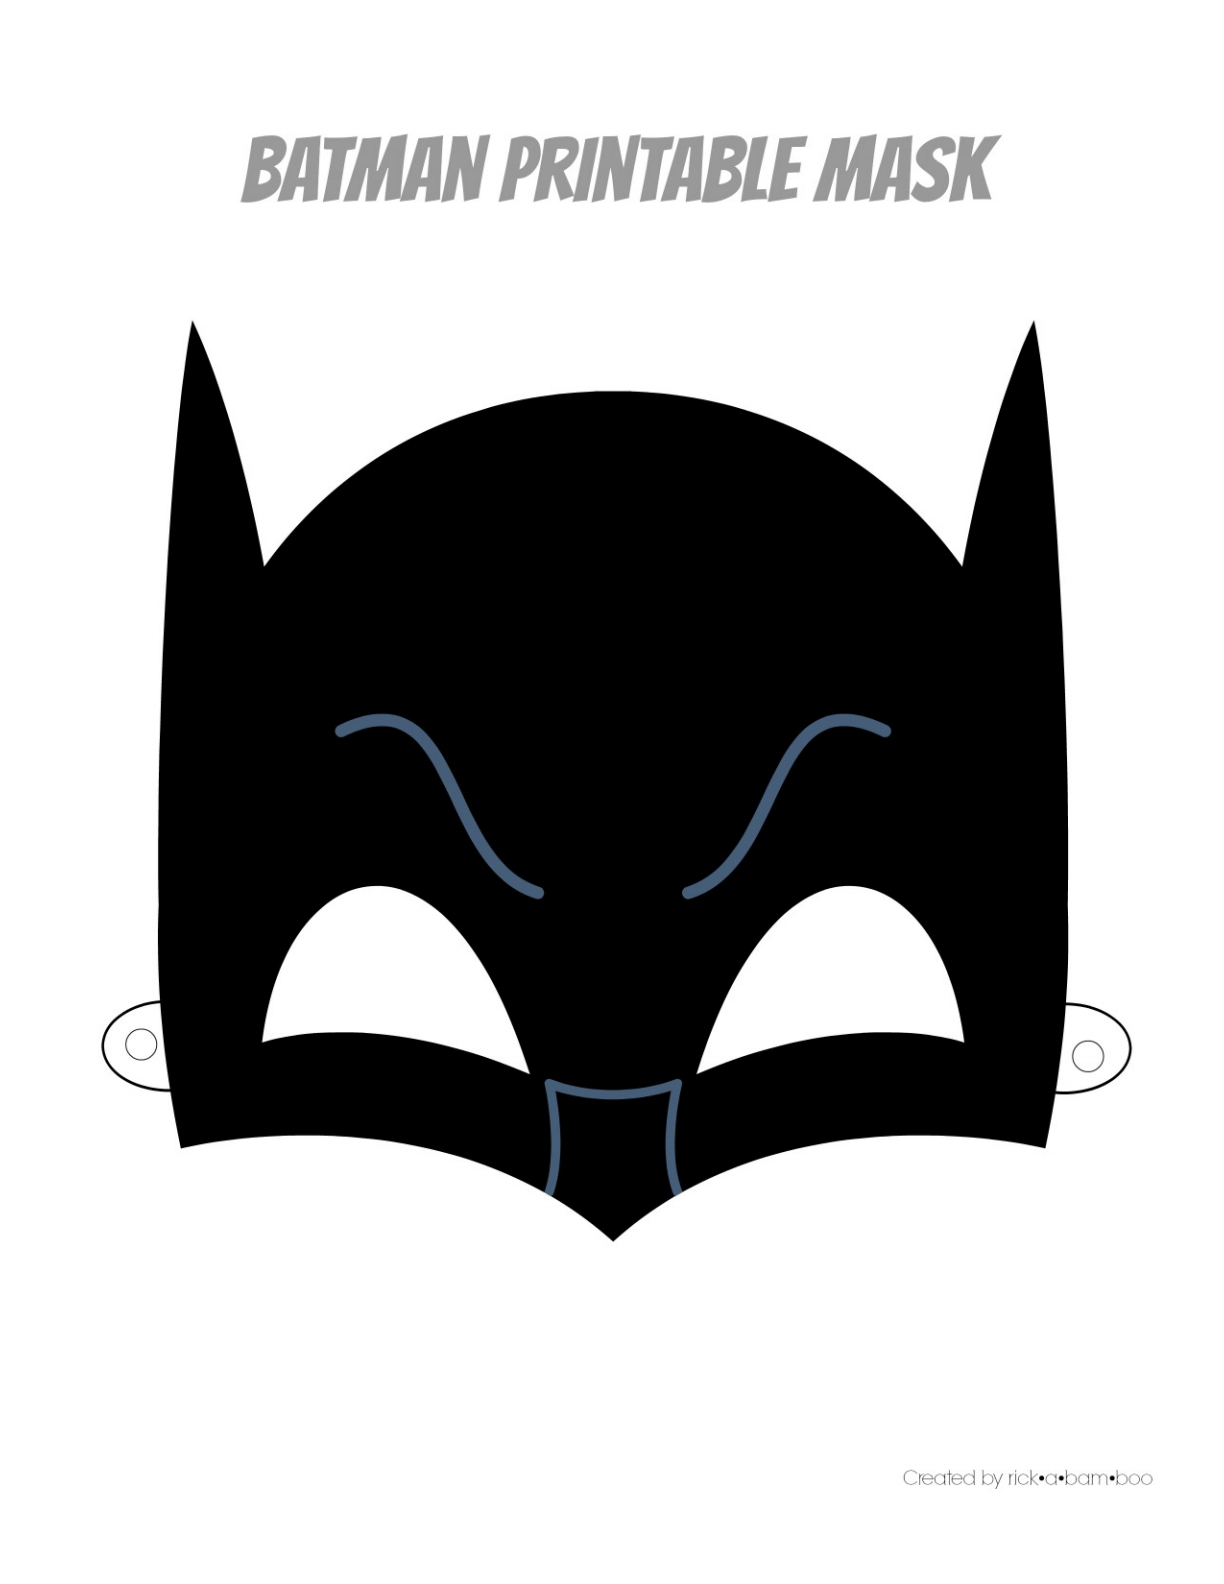 Shared With Dropbox | $3 Or Less | Pinterest | Antifaz, Fiestas - Free Printable Superhero Masks